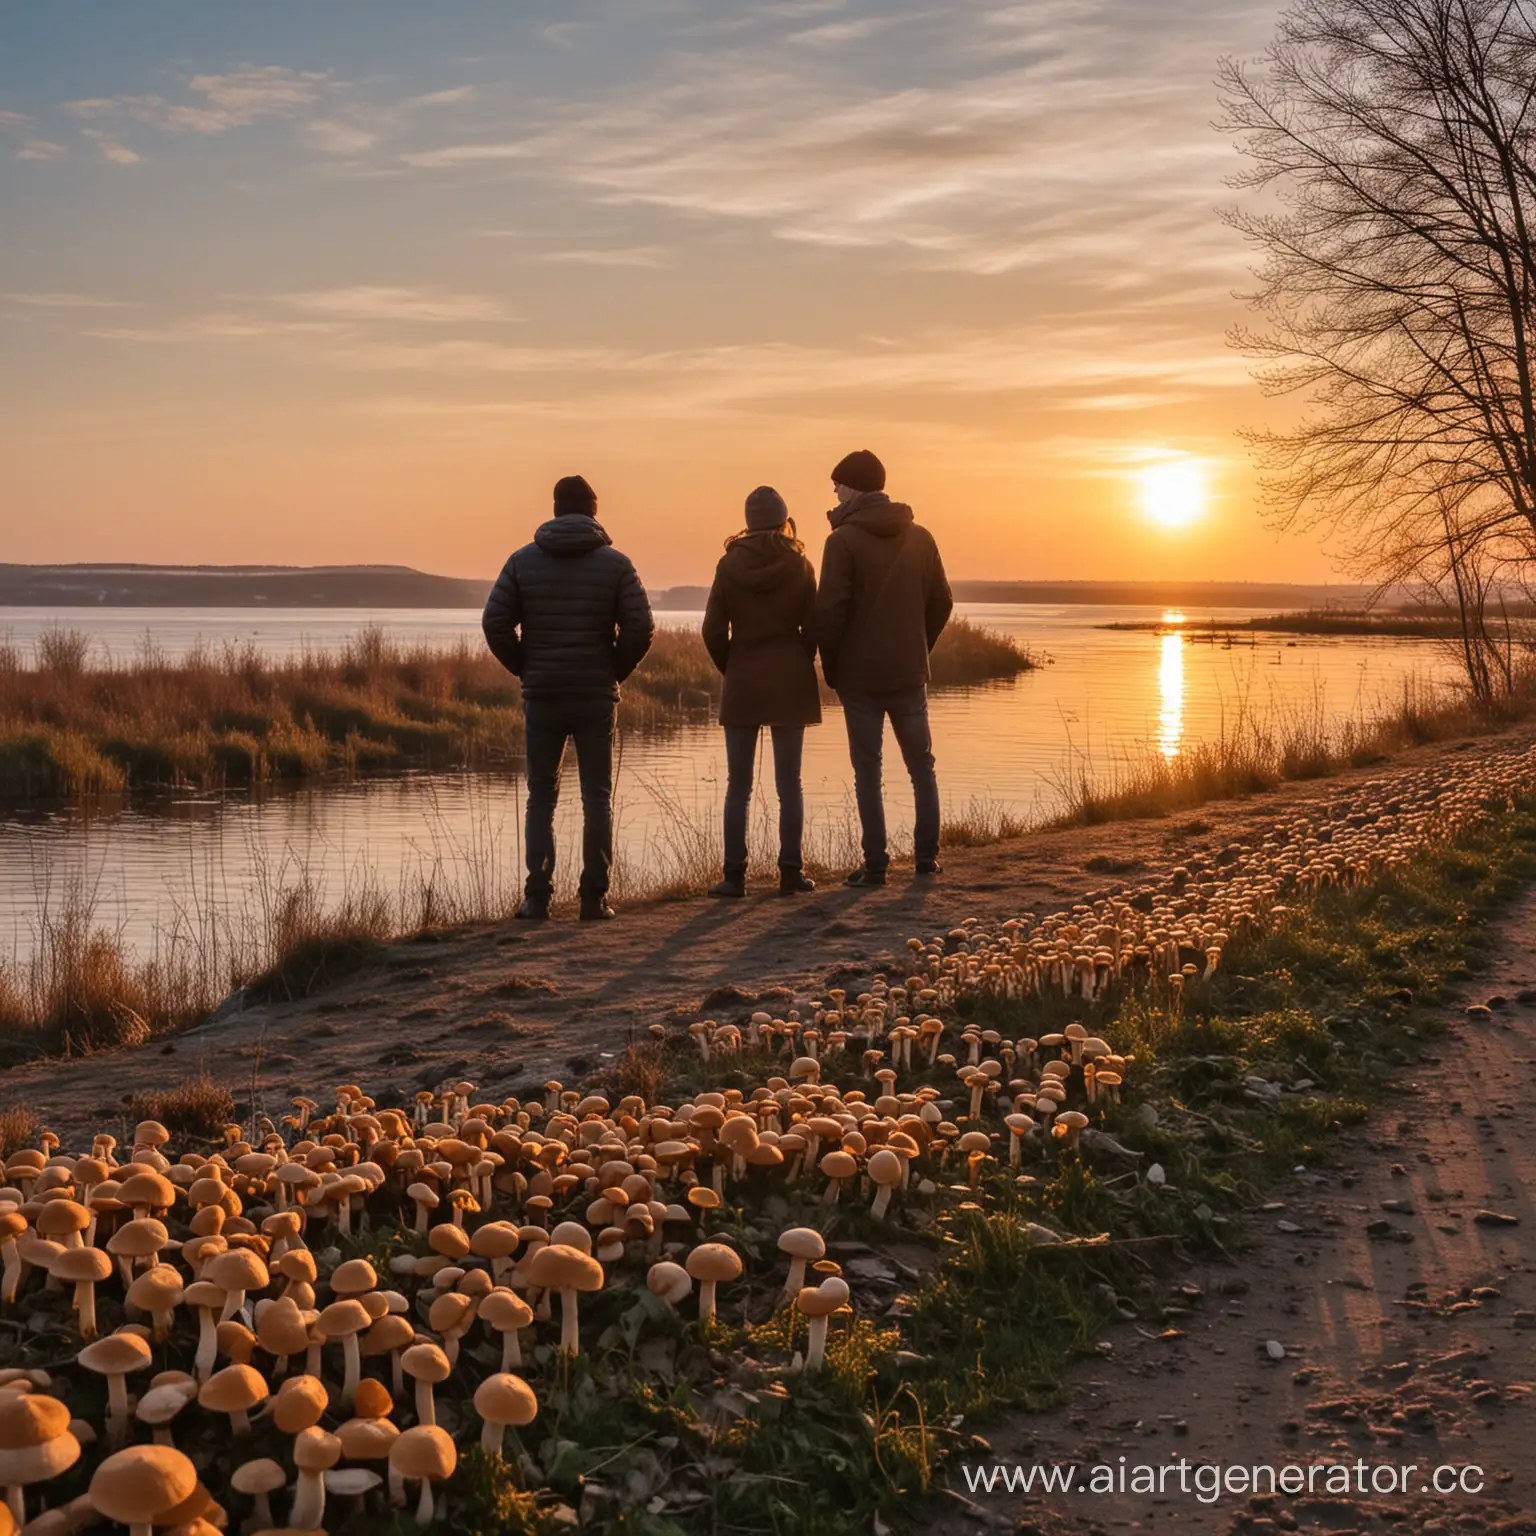 Best-Friends-Enjoying-Sunset-on-Volga-River-Embankment-under-Mushroom-Canopy